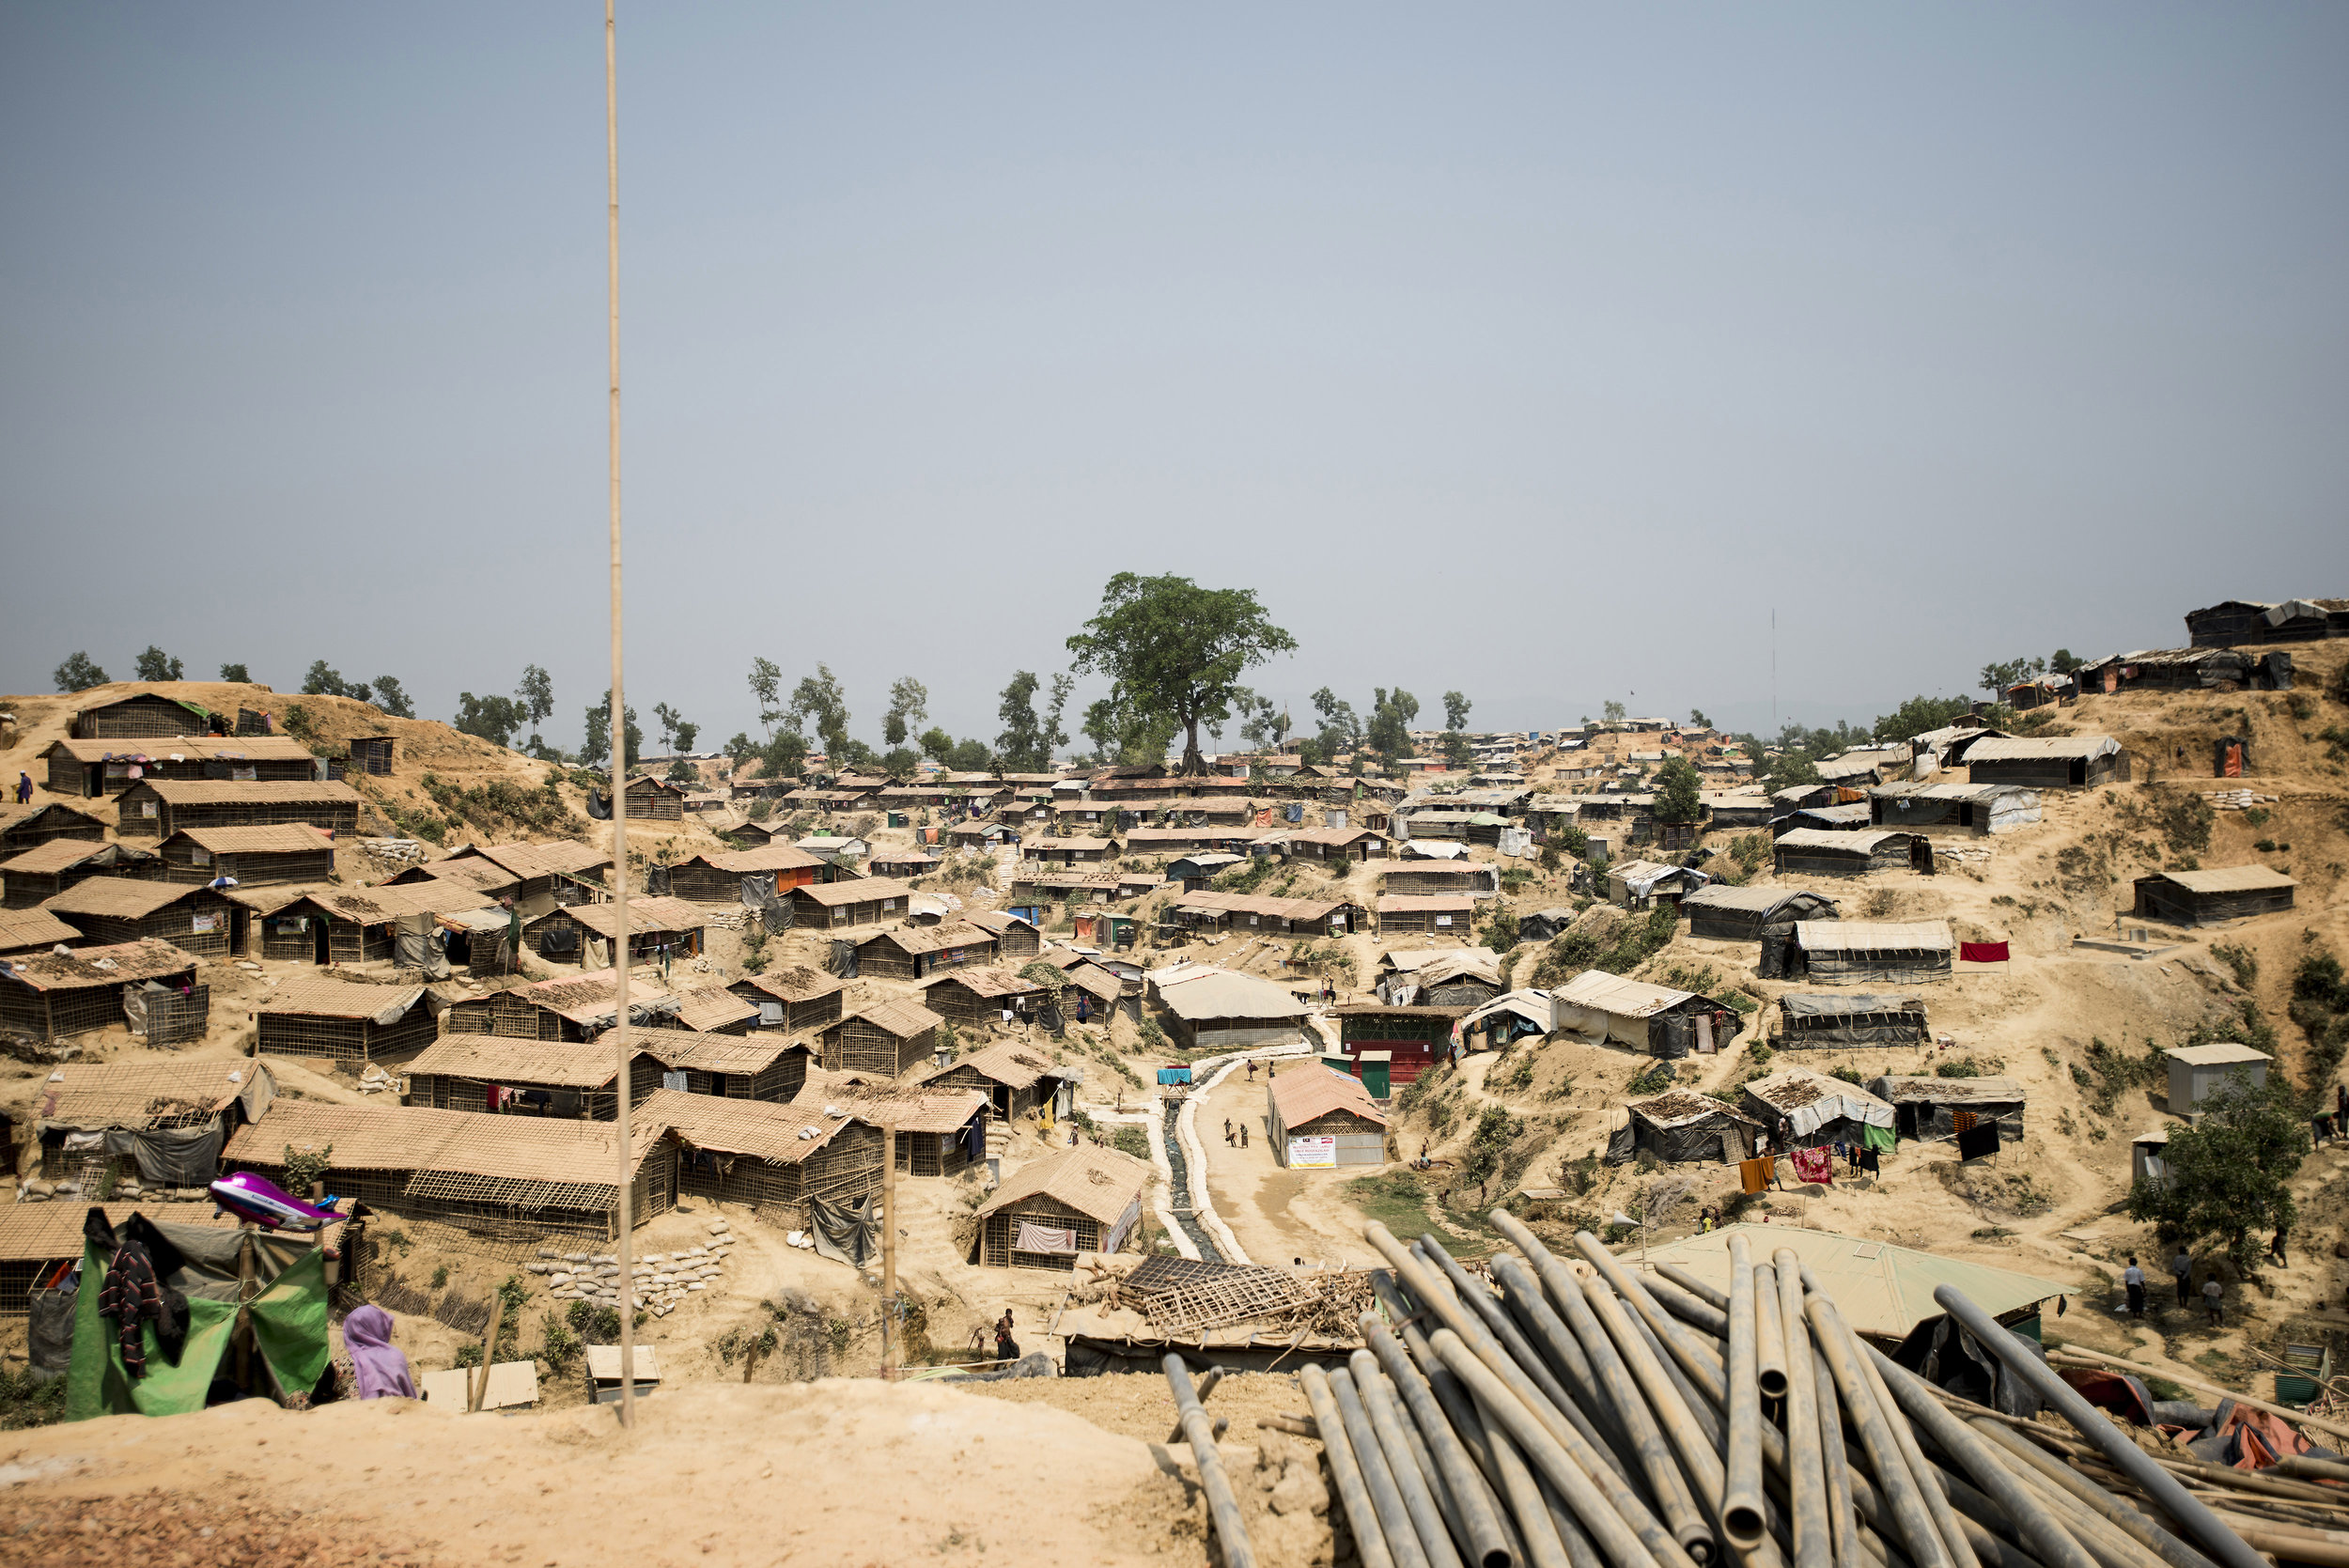  Kutupalong Refugee Camp. Cox’s Bazar, Bangladesh. 2018. 